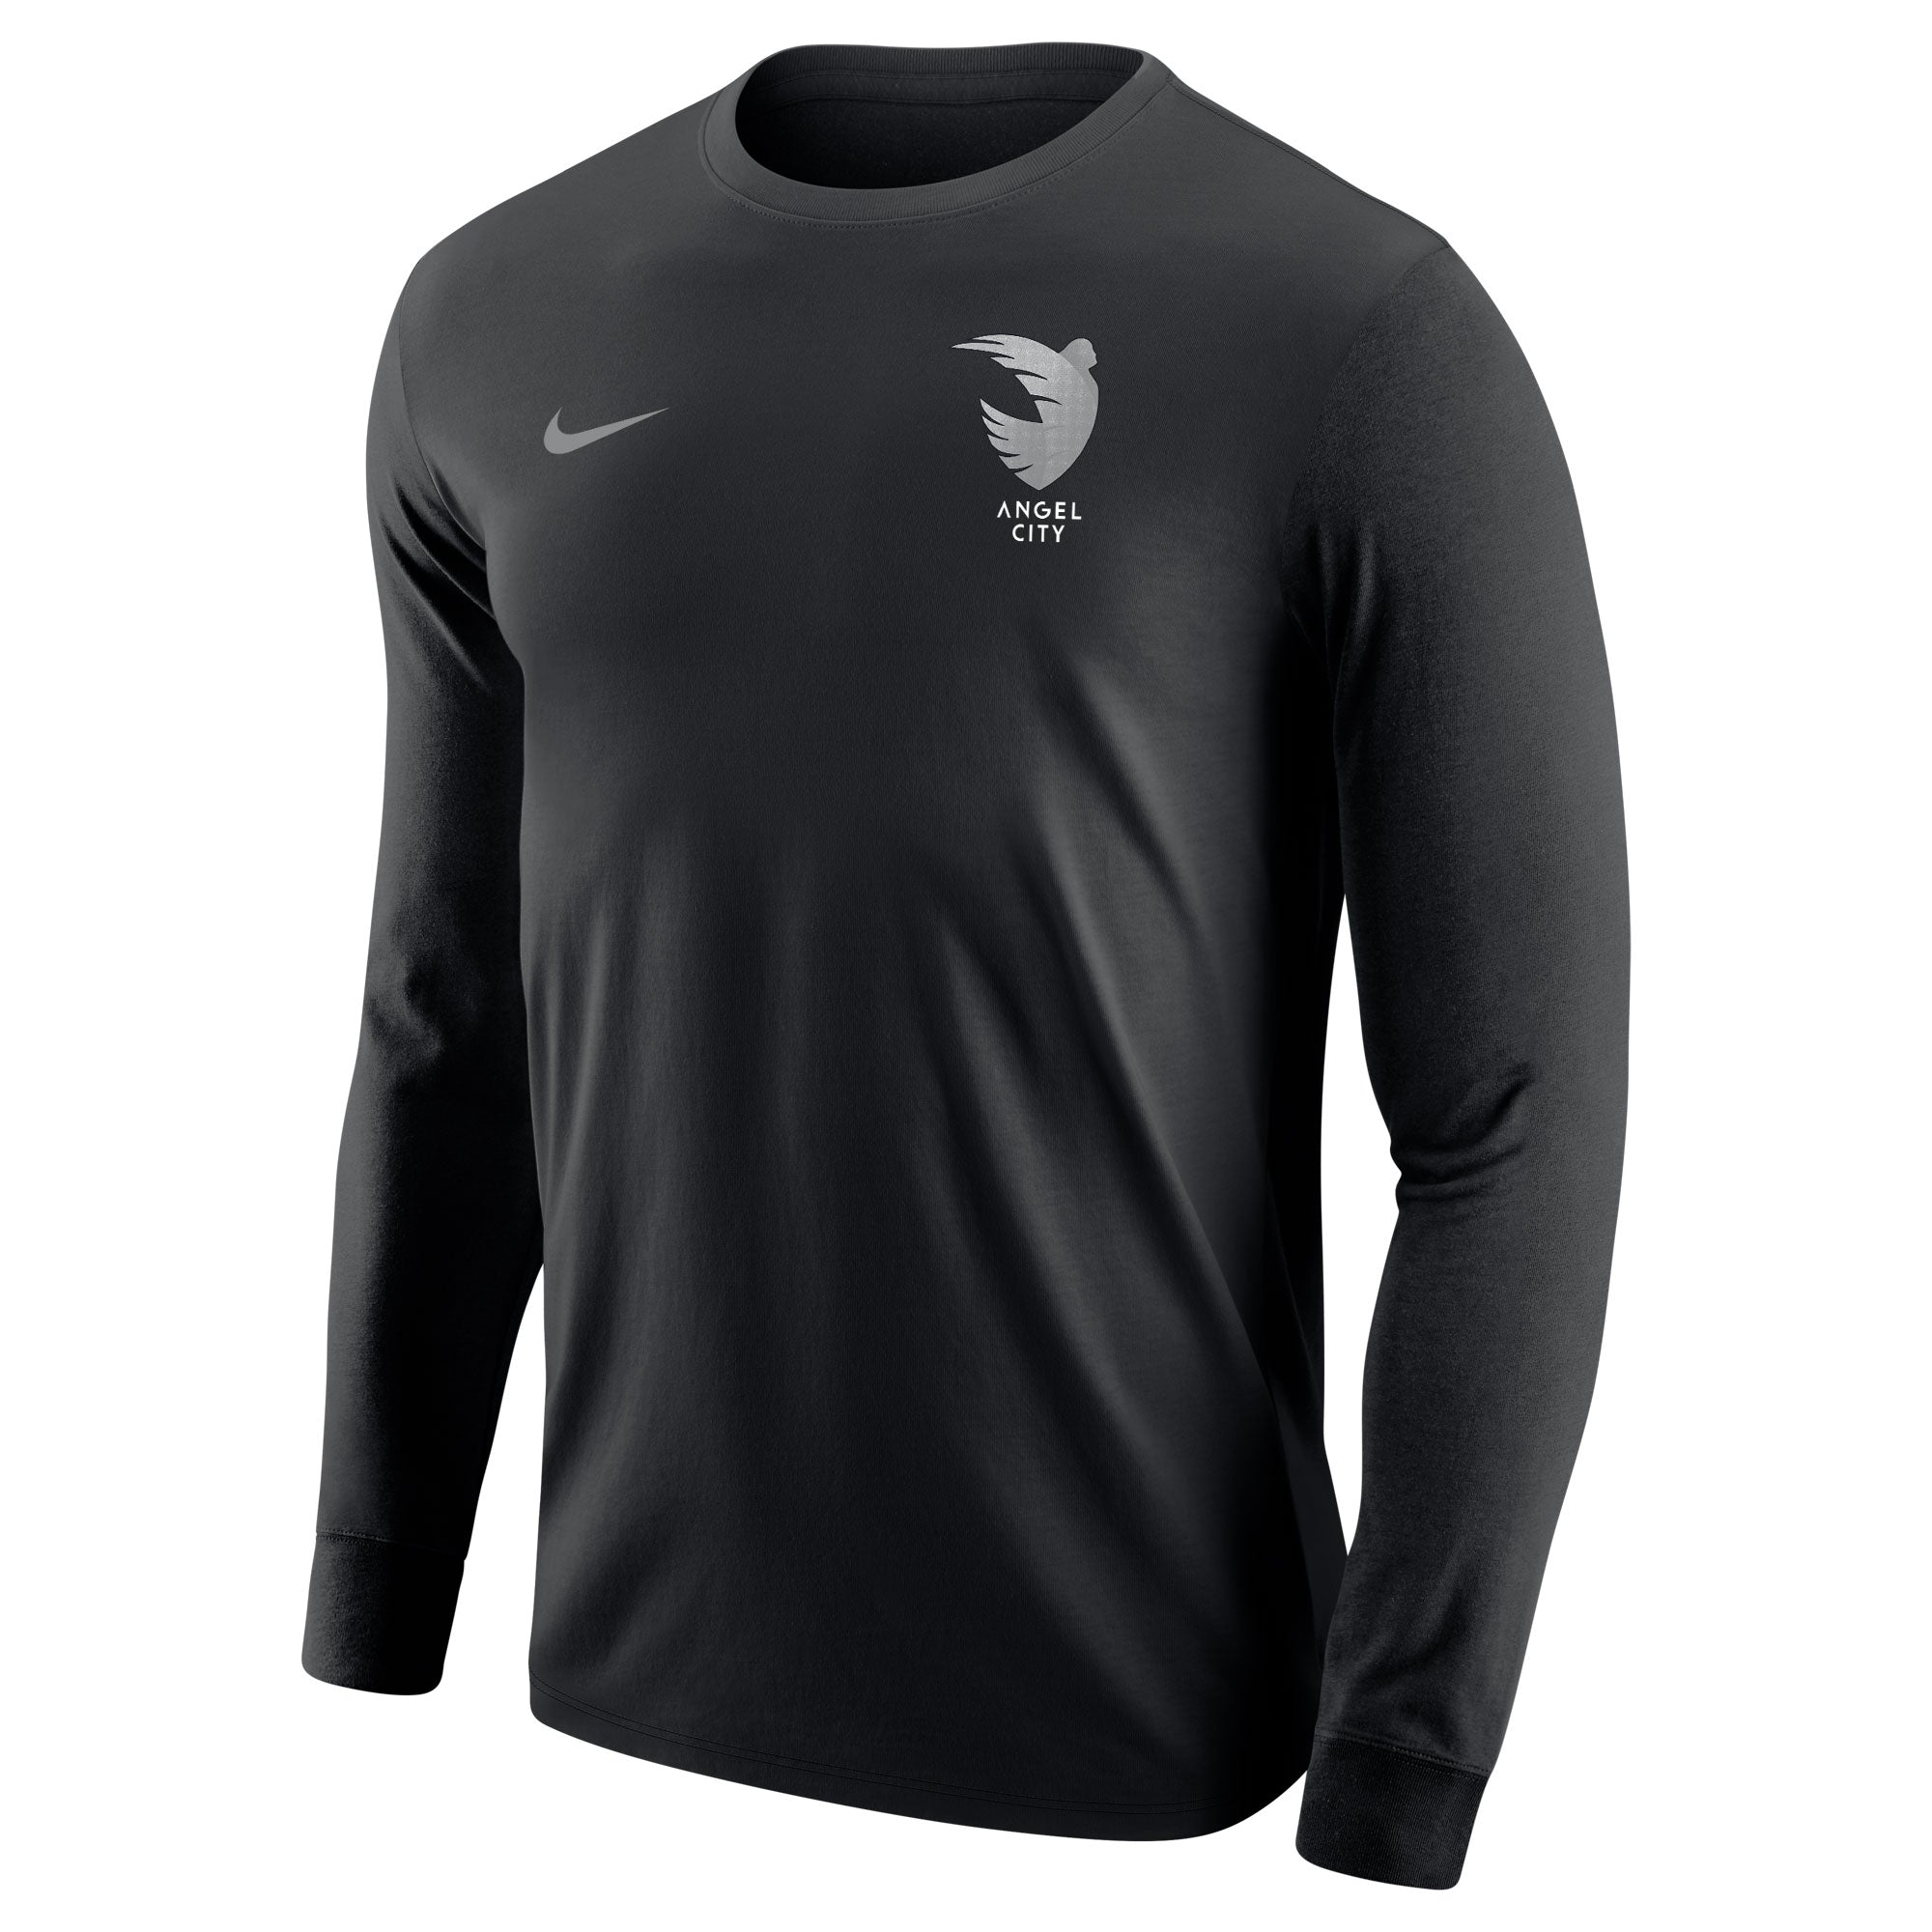 Angel City Nike Unisex Armor Emblem camiseta de manga larga negra